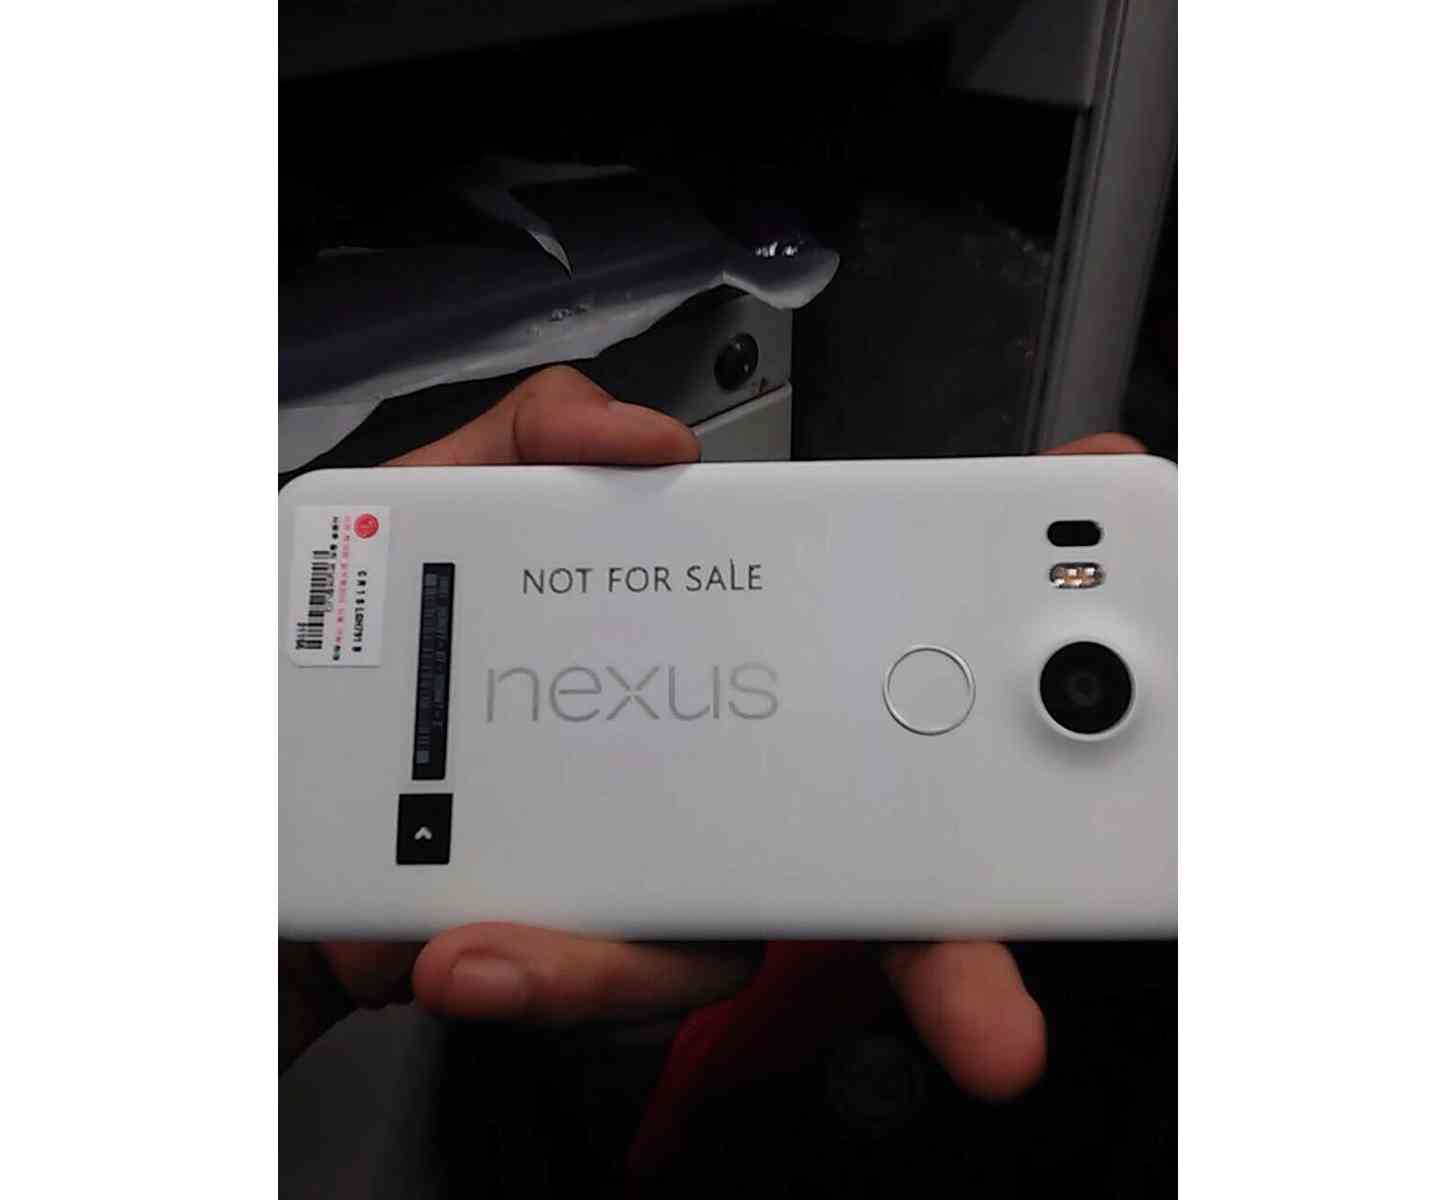 LG Nexus 5 2015 hands on leak large